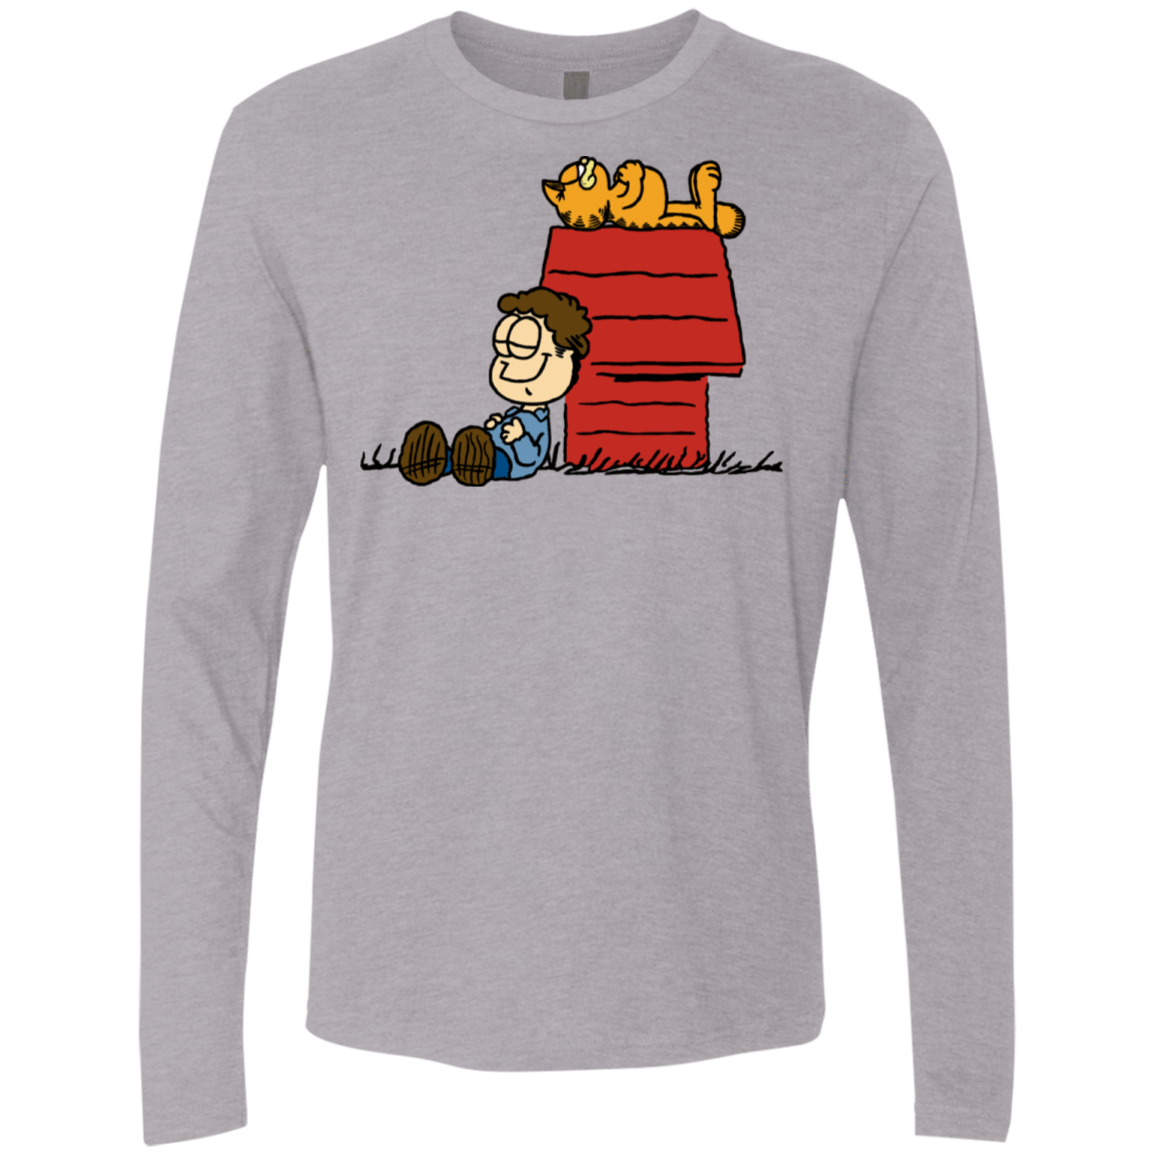 T-Shirts Heather Grey / S Jon Brown Men's Premium Long Sleeve